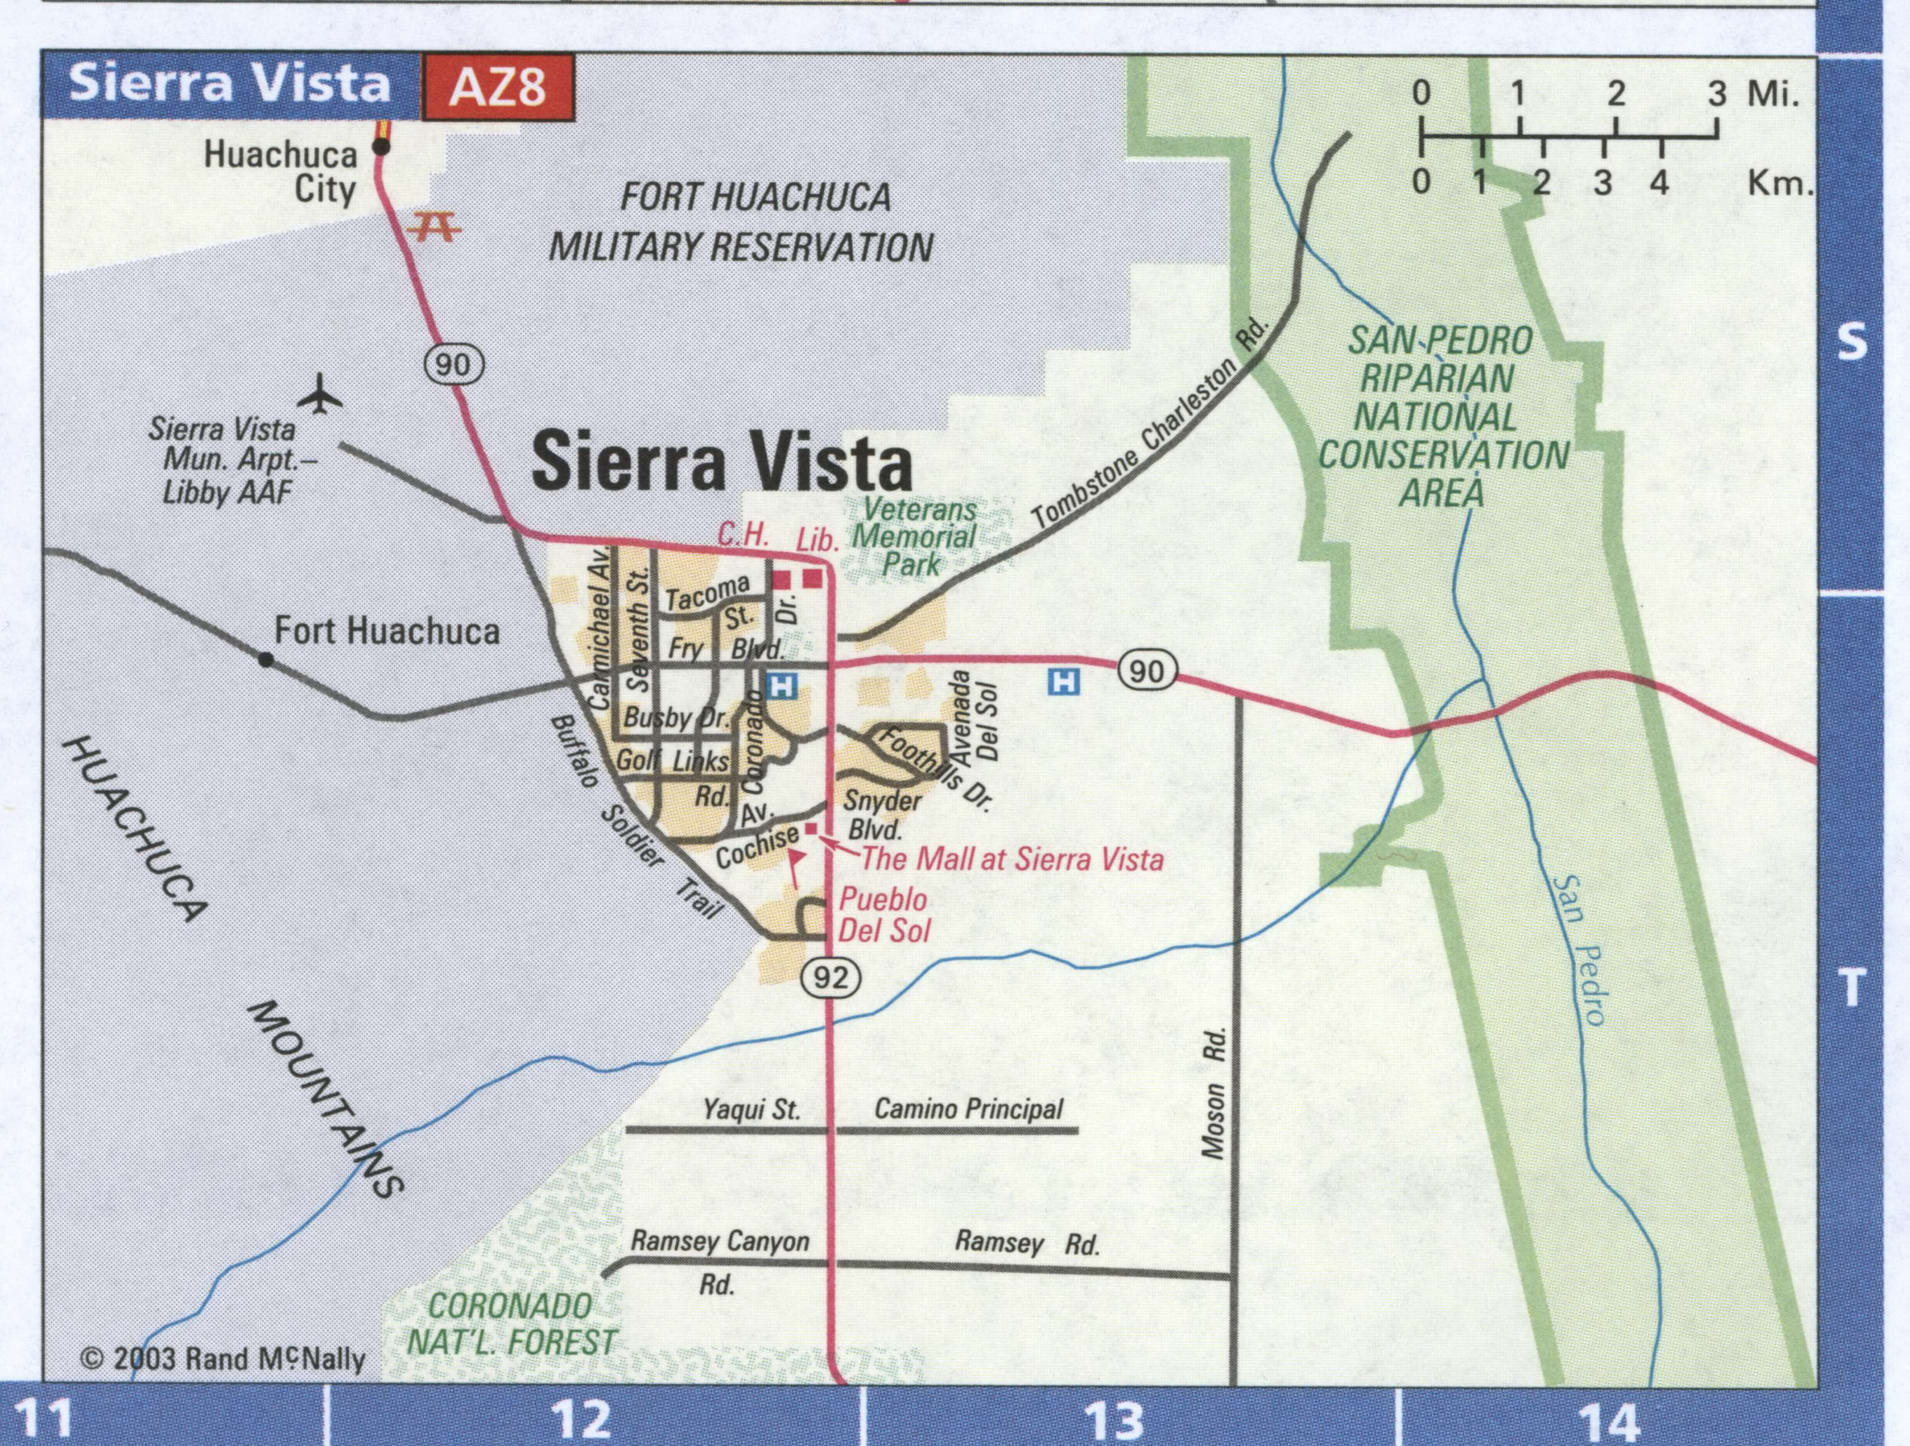 Sierra Vista AZ road map